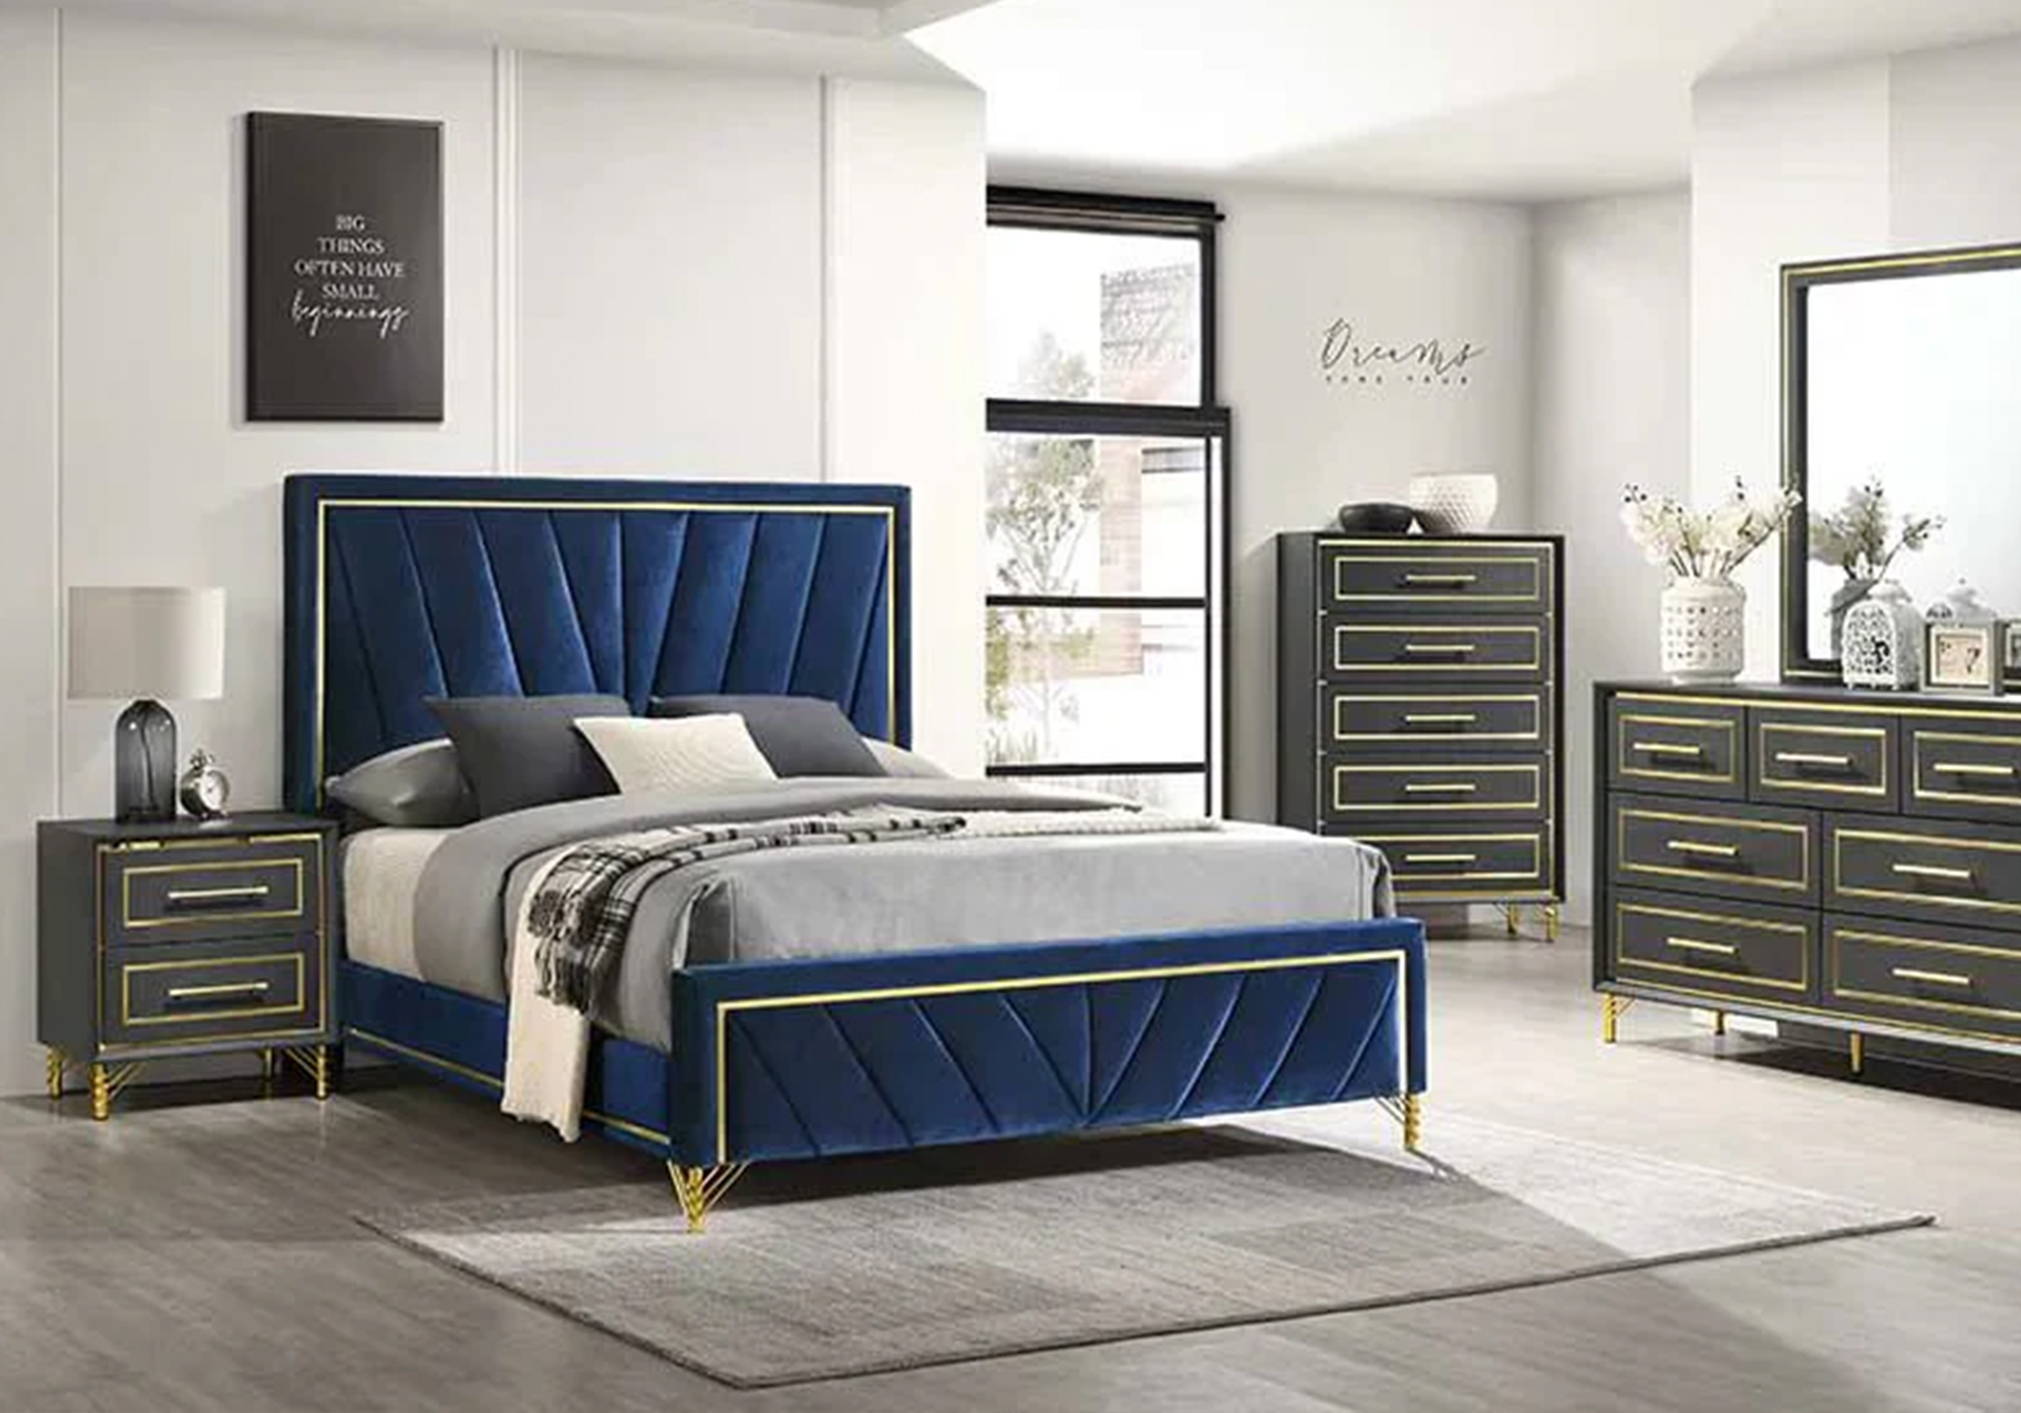 Elegant rustic brown bedroom set. Click to Shop more bedroom options. 